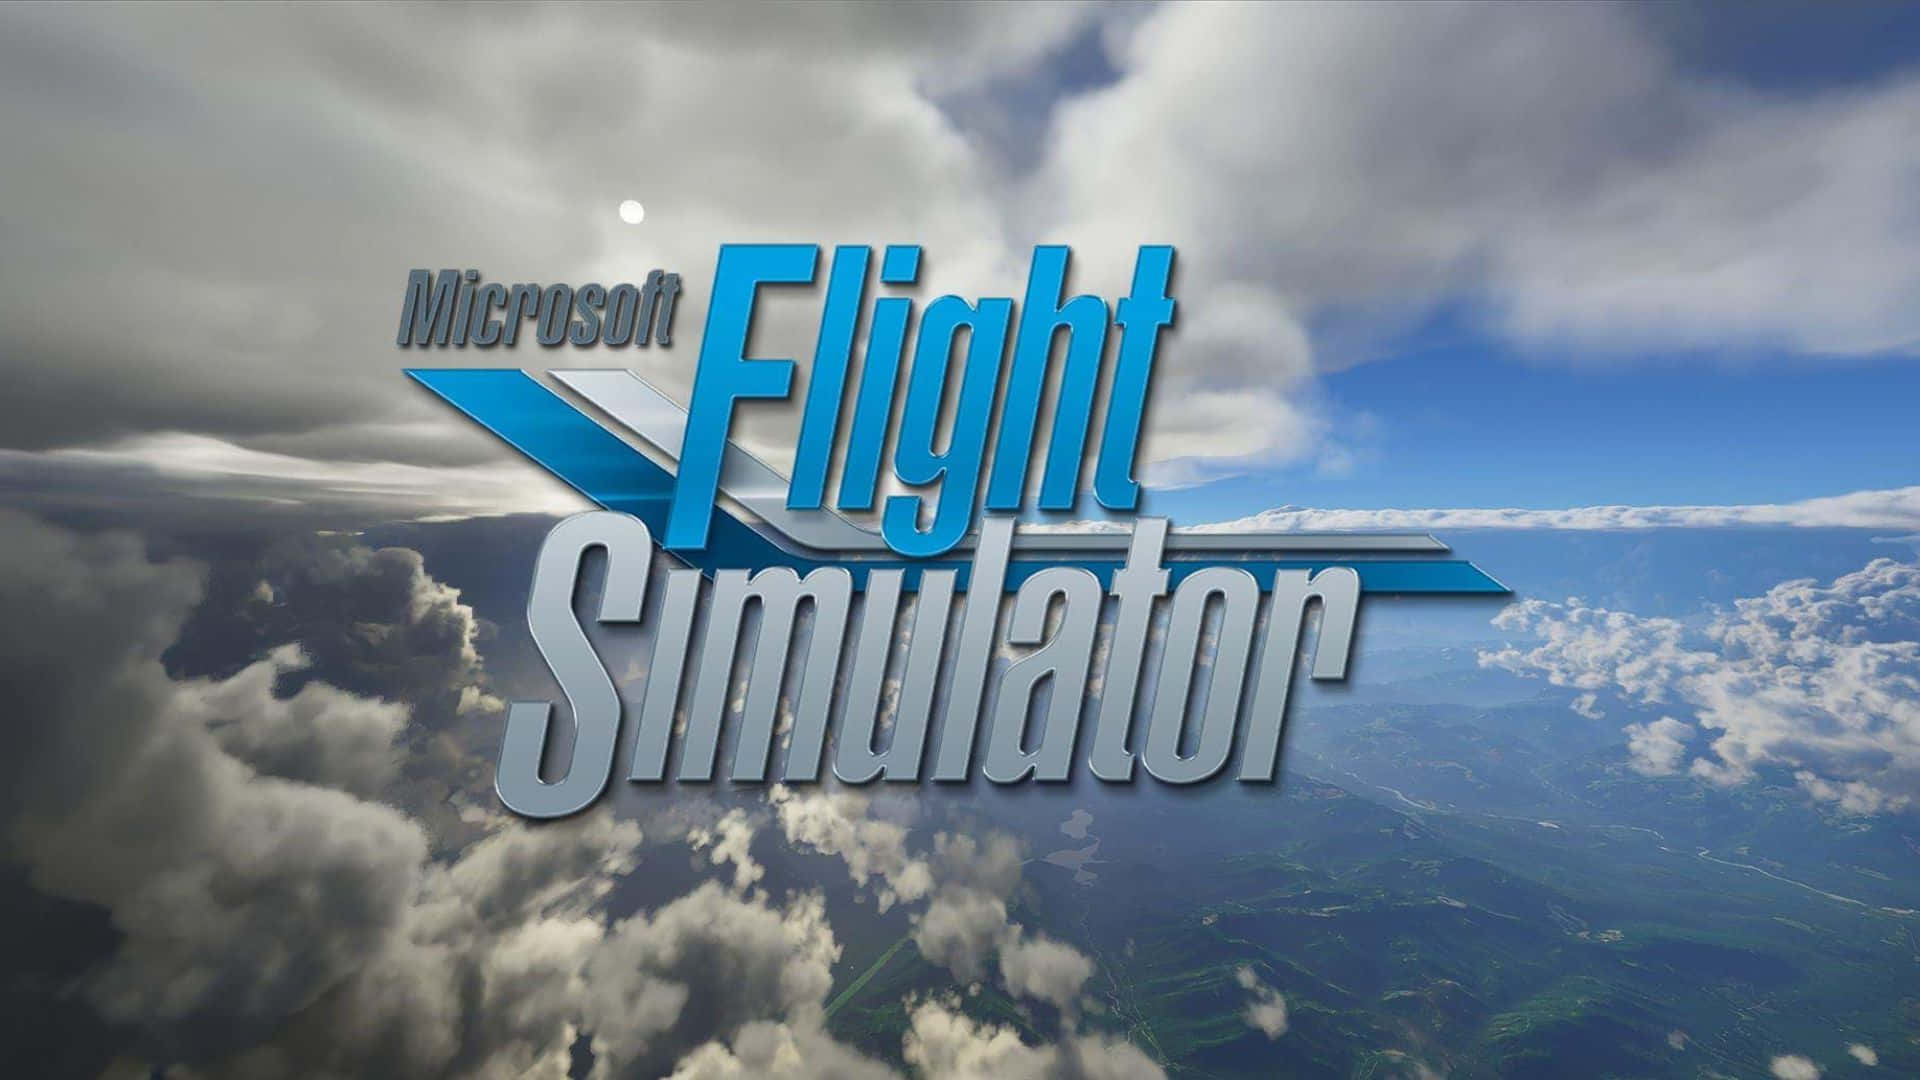 1920x1080 Microsoft Flight Simulator Background Wallpaper